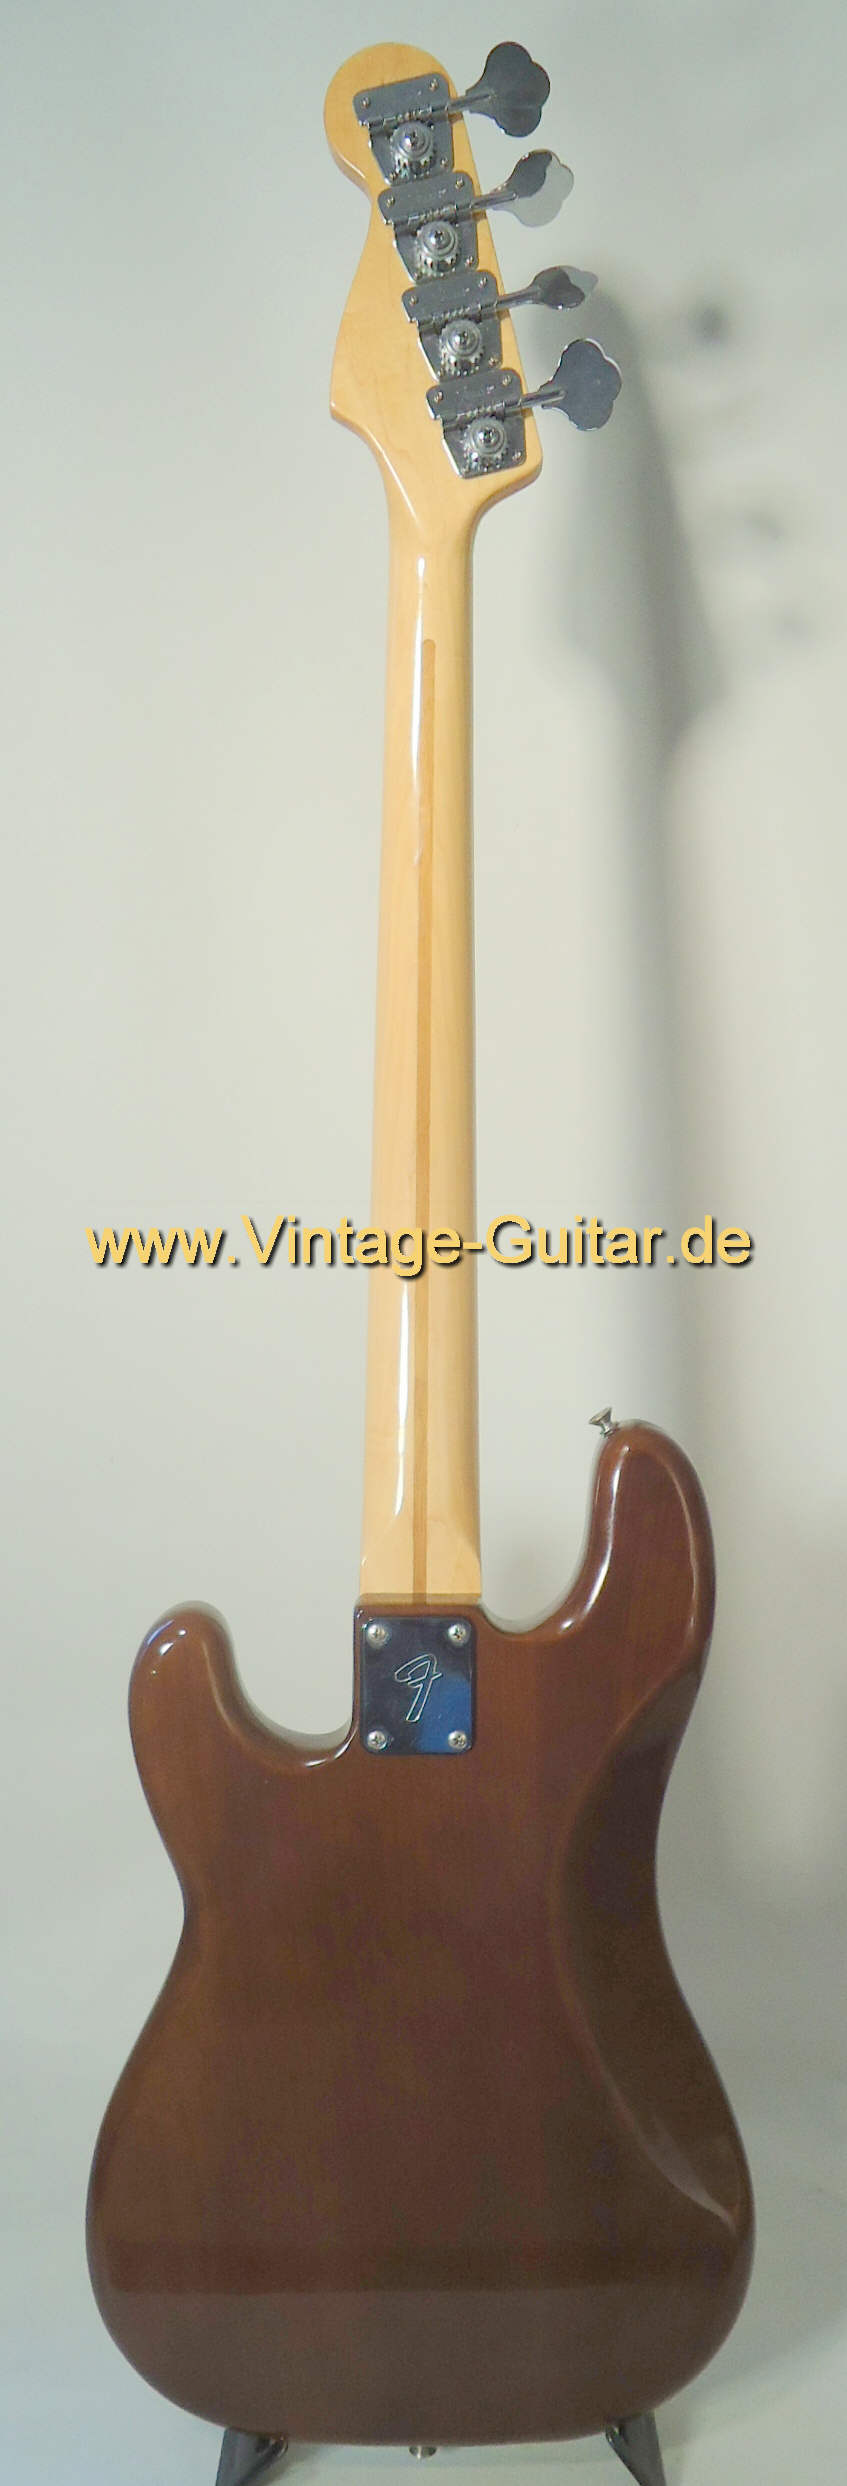 Fender-Precision-1977-mocha-c.jpg